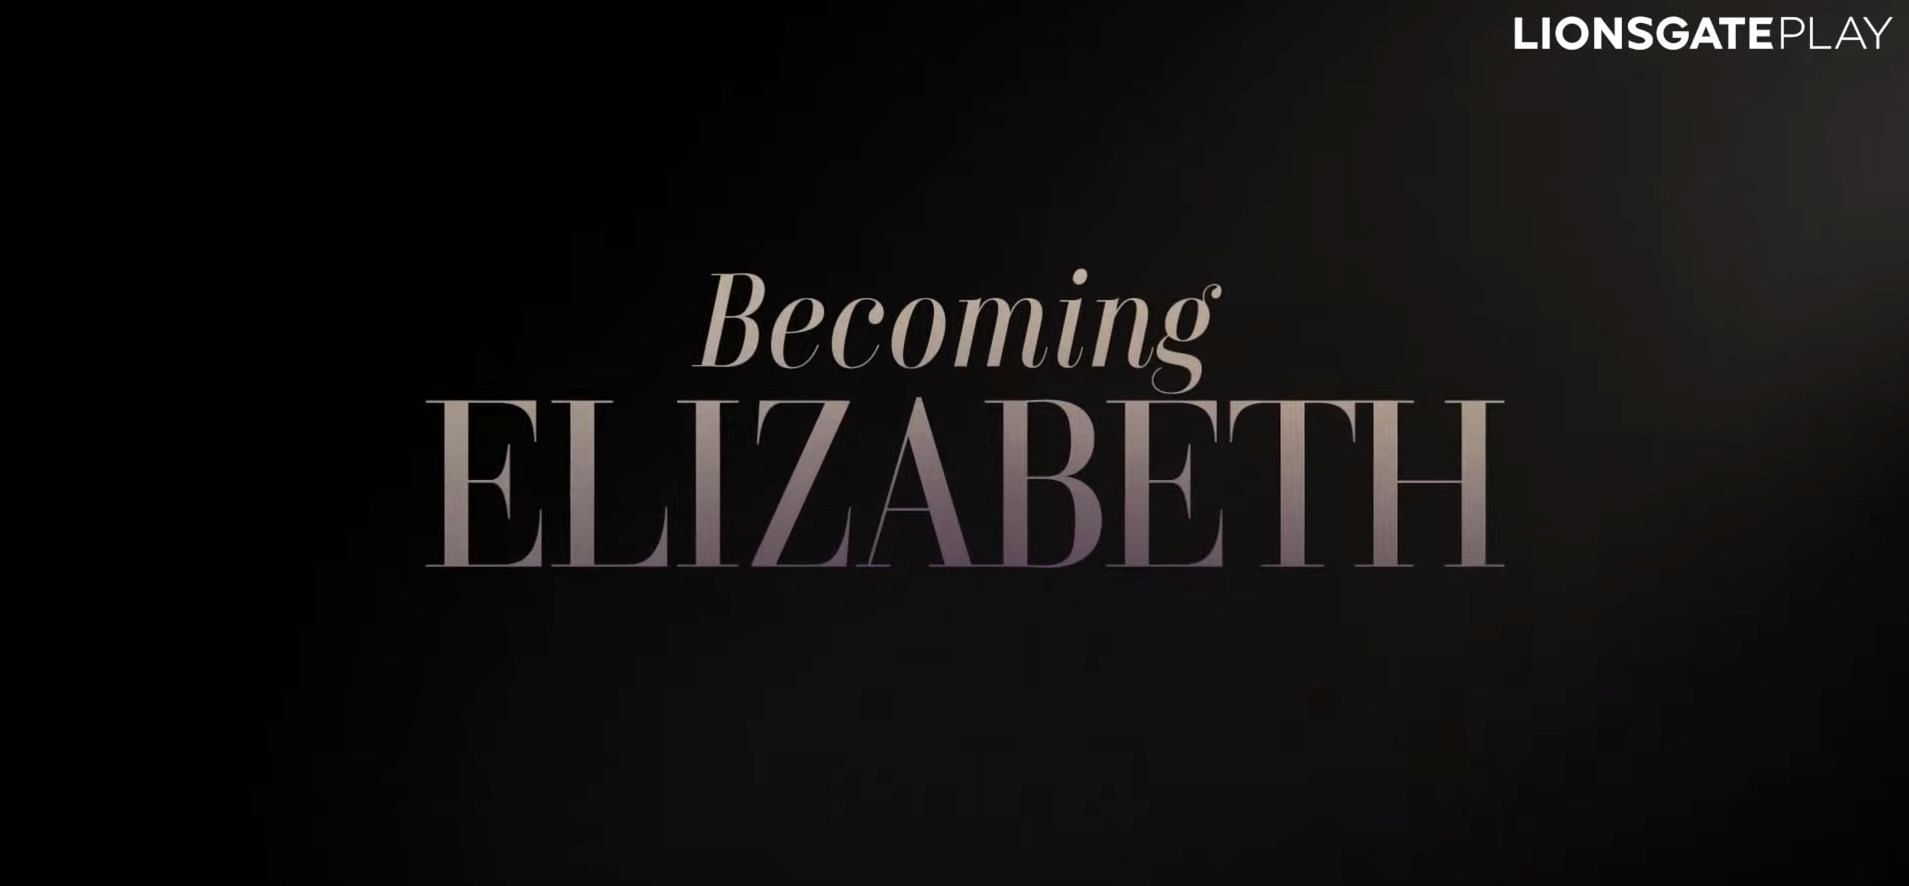 Becoming Elizabeth (Image via LionsgatePlay)